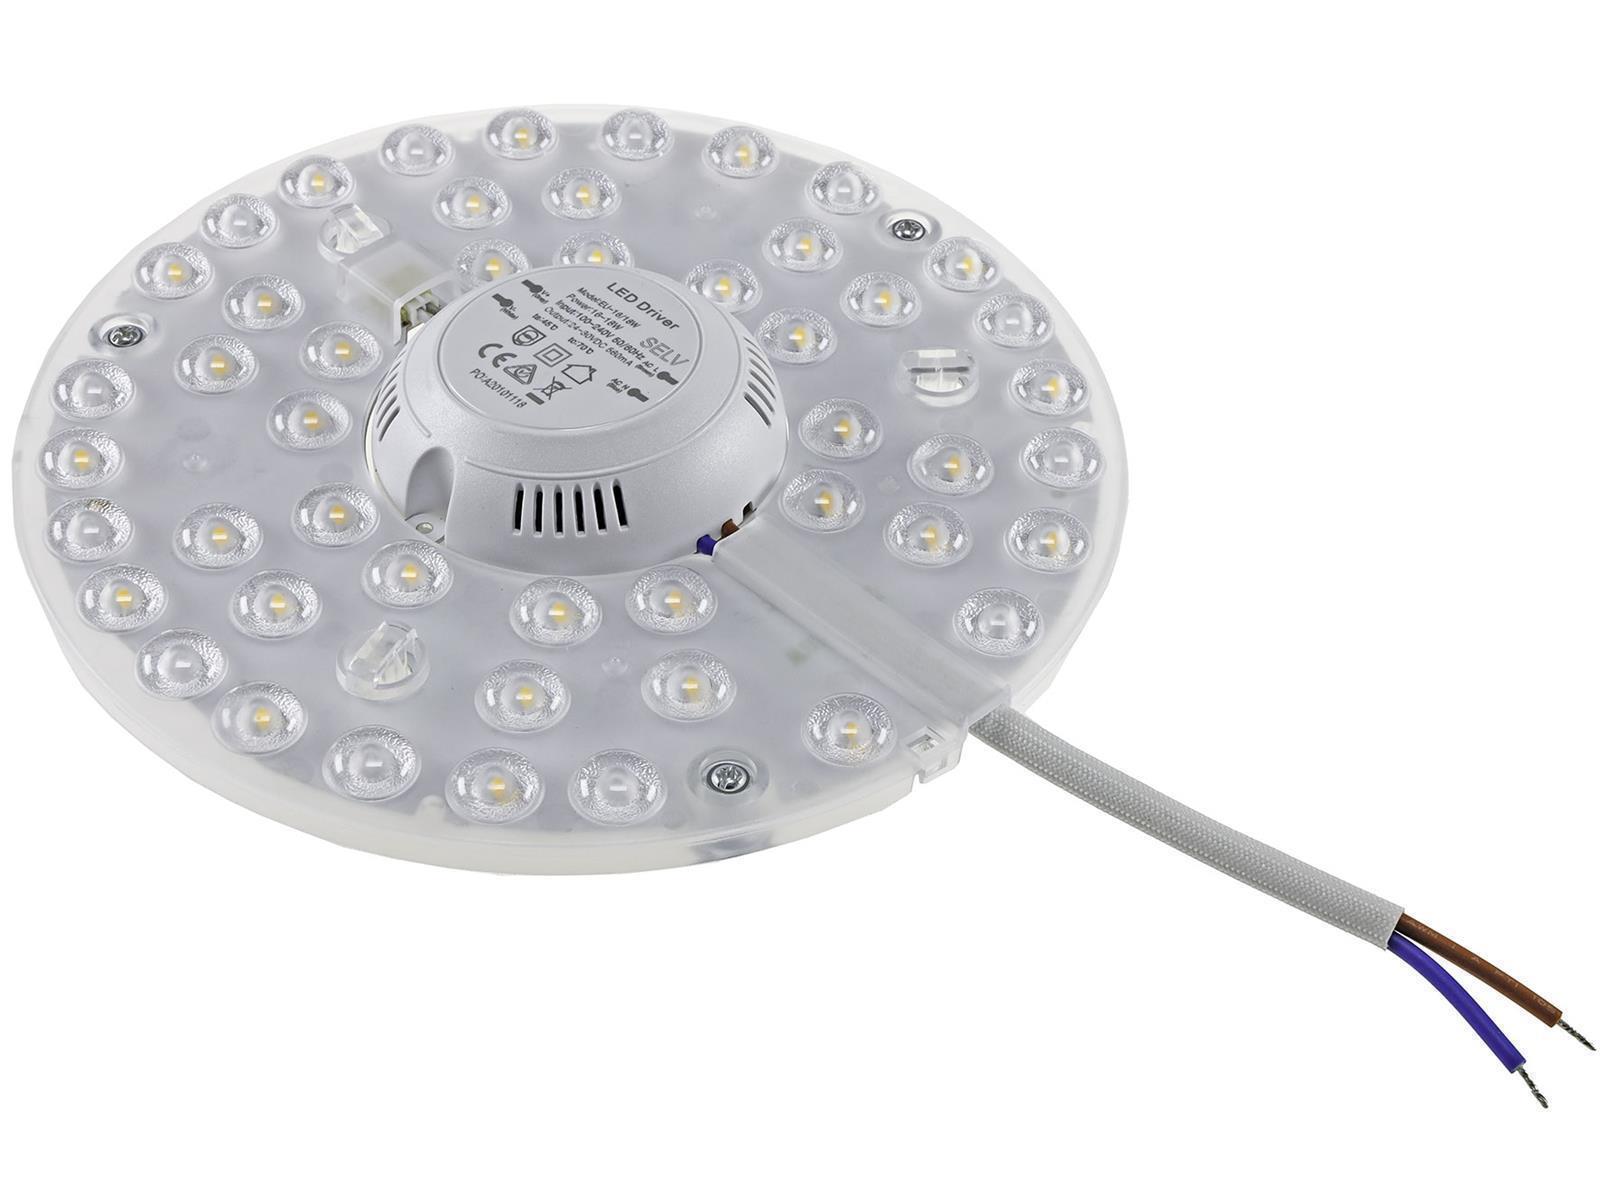 LED Umrüstmodul "UM24ww" für LeuchtenØ180mm, 24W, 2680lm, 3000K, Magnethalter